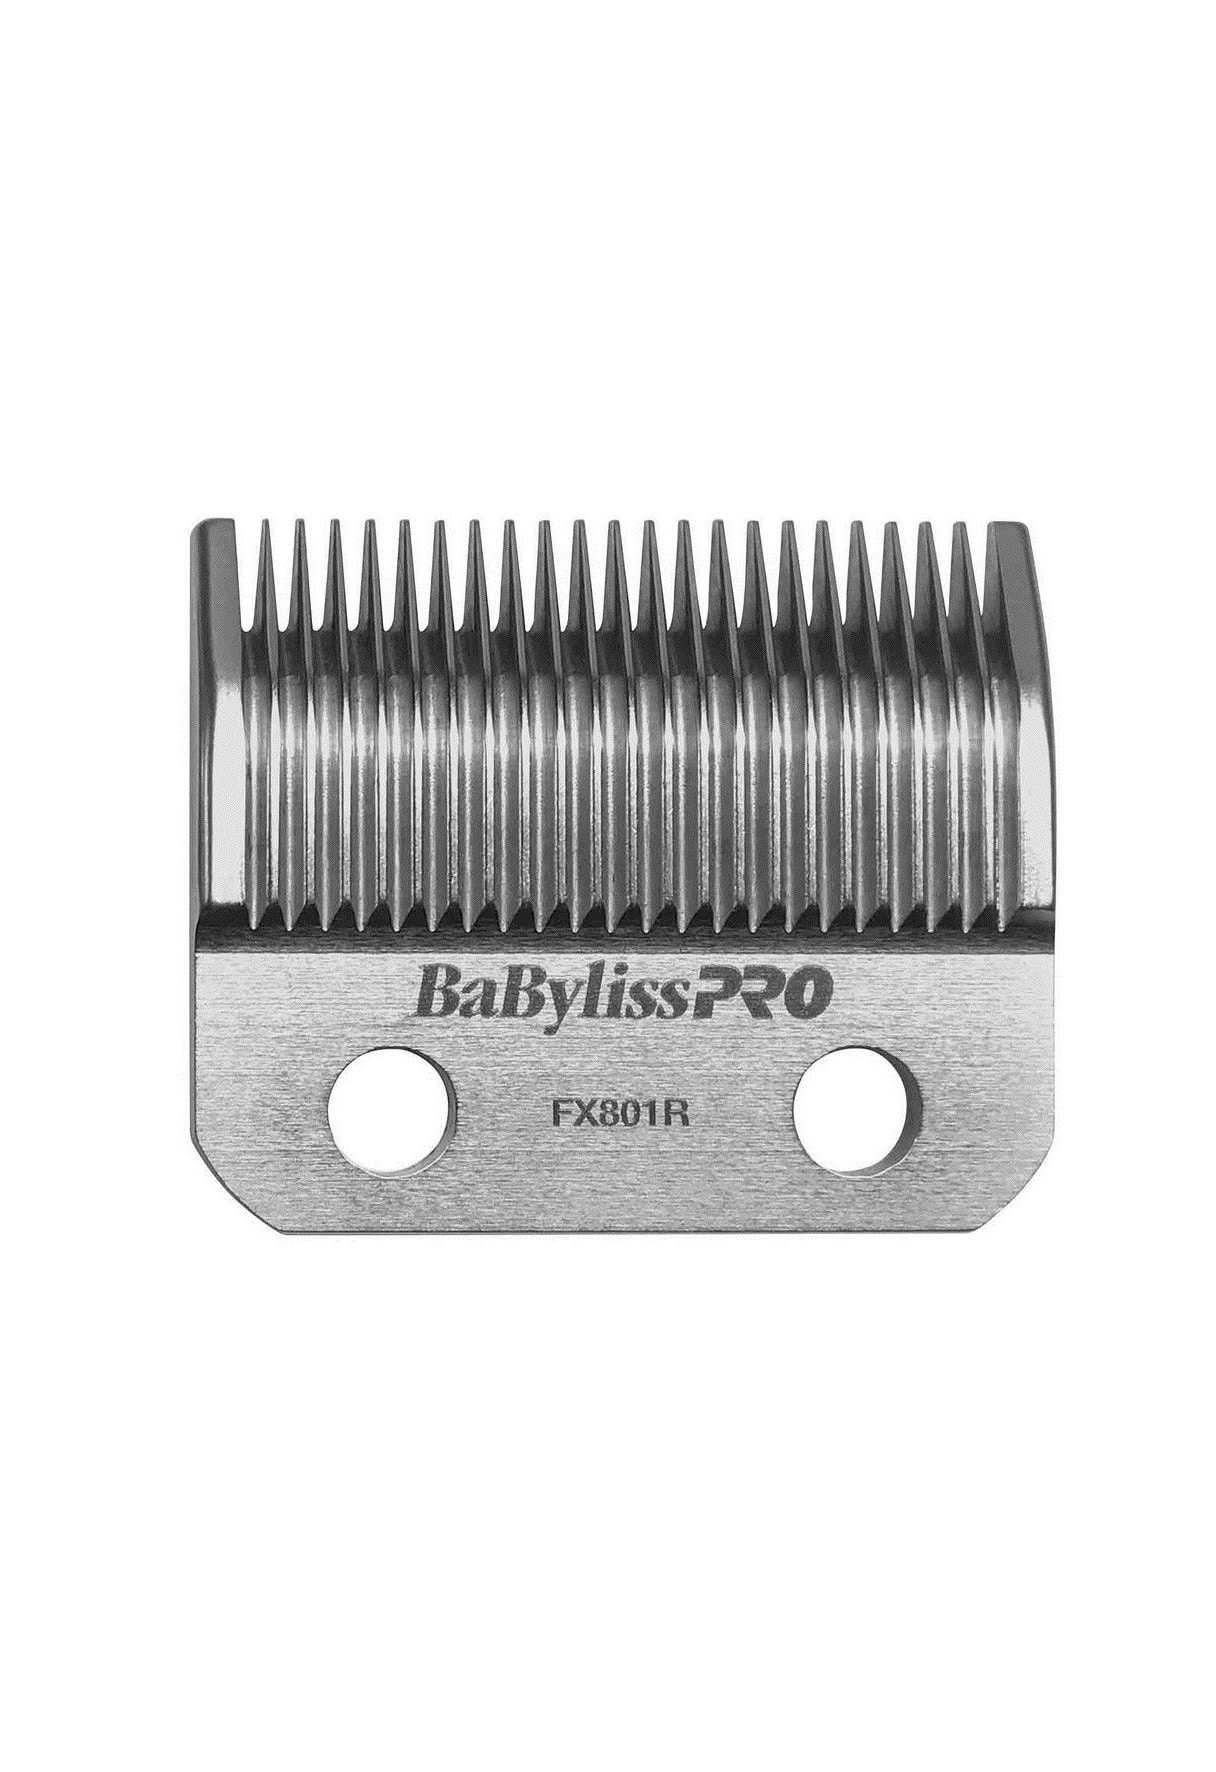 remington delicates & body hair trimmer bht250